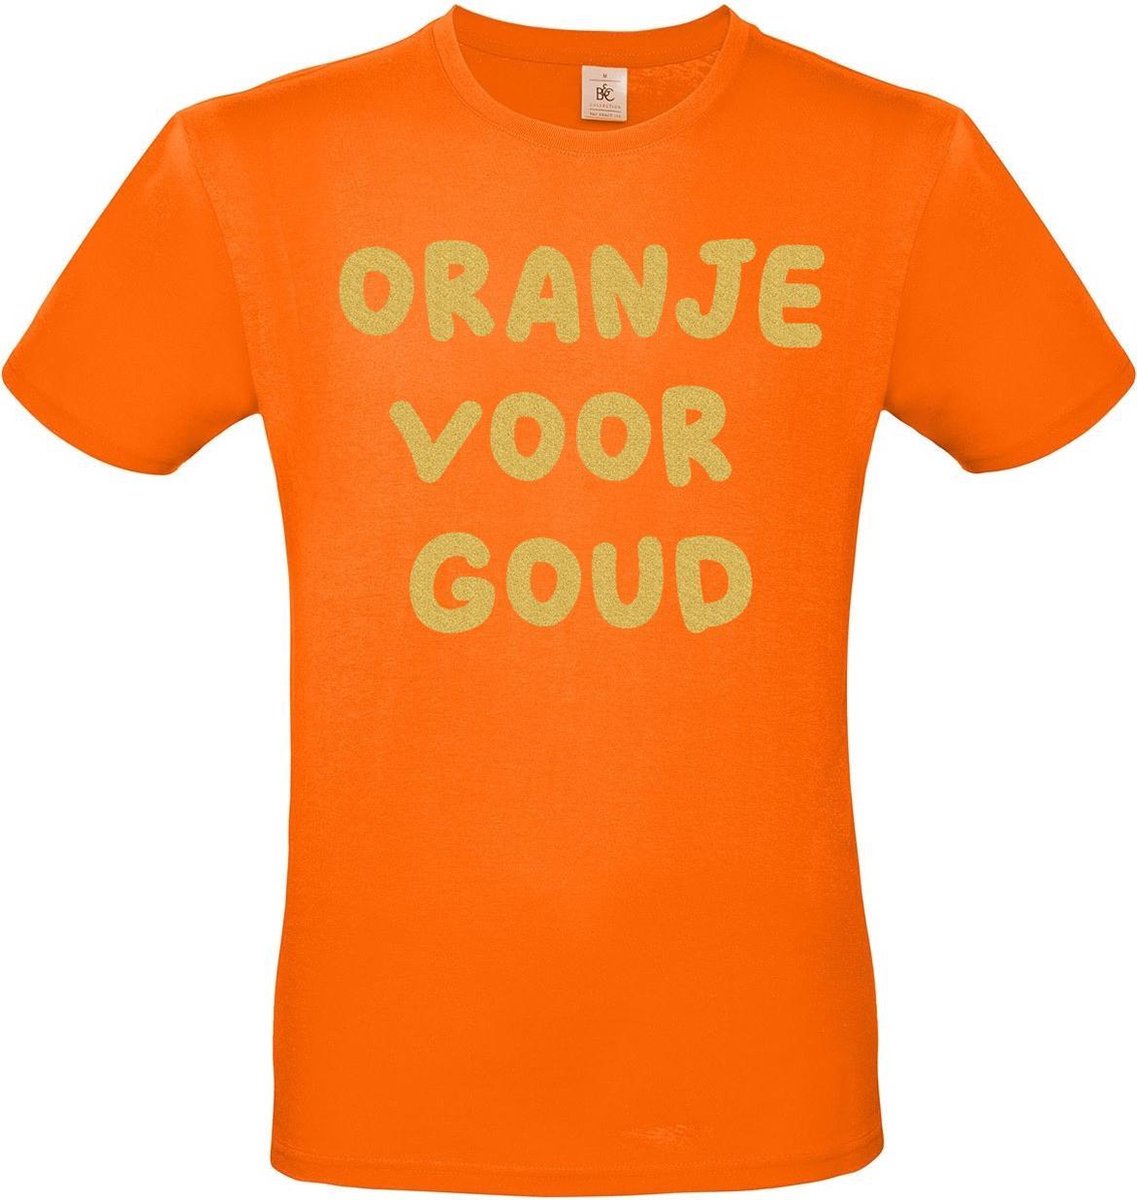 T-shirt met opdruk “Oranje voor goud” | EK 2021 | Oranje T-shirt met goudkleurige opdruk. | Herojodeals